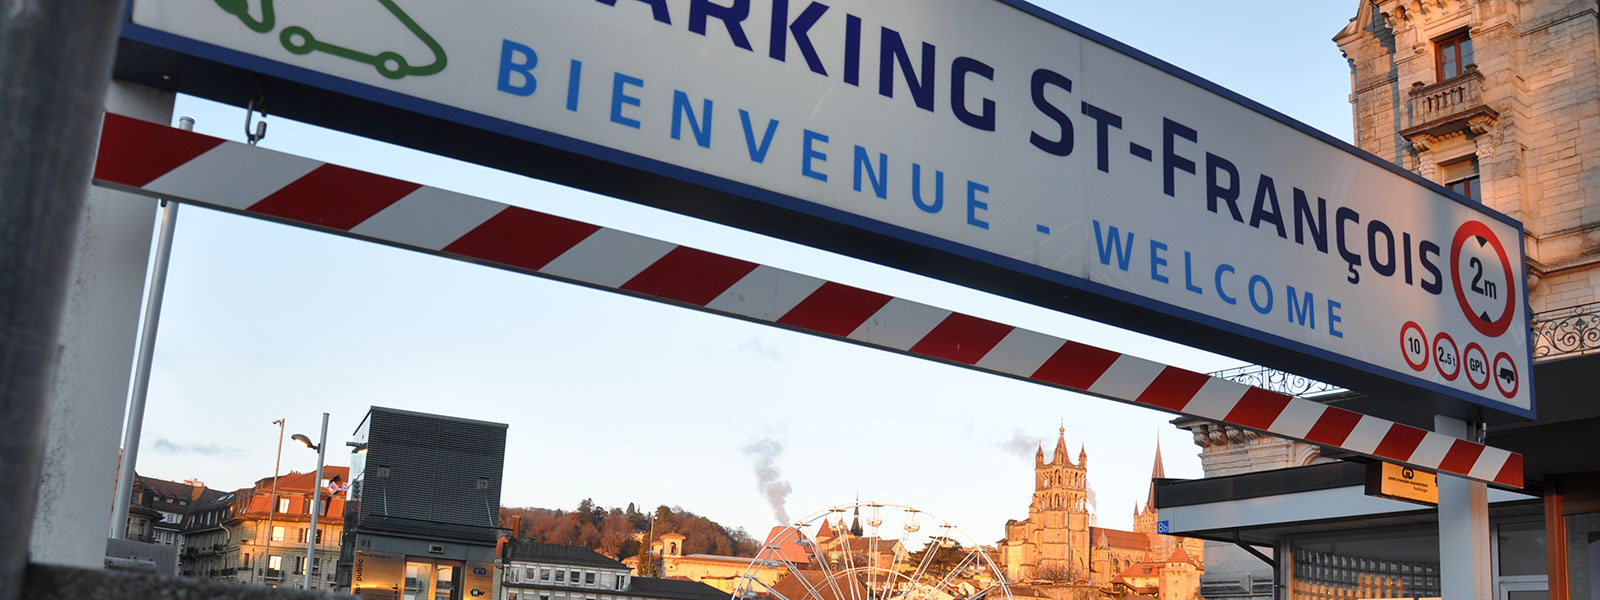 header tarifs - Parking St-François Lausanne